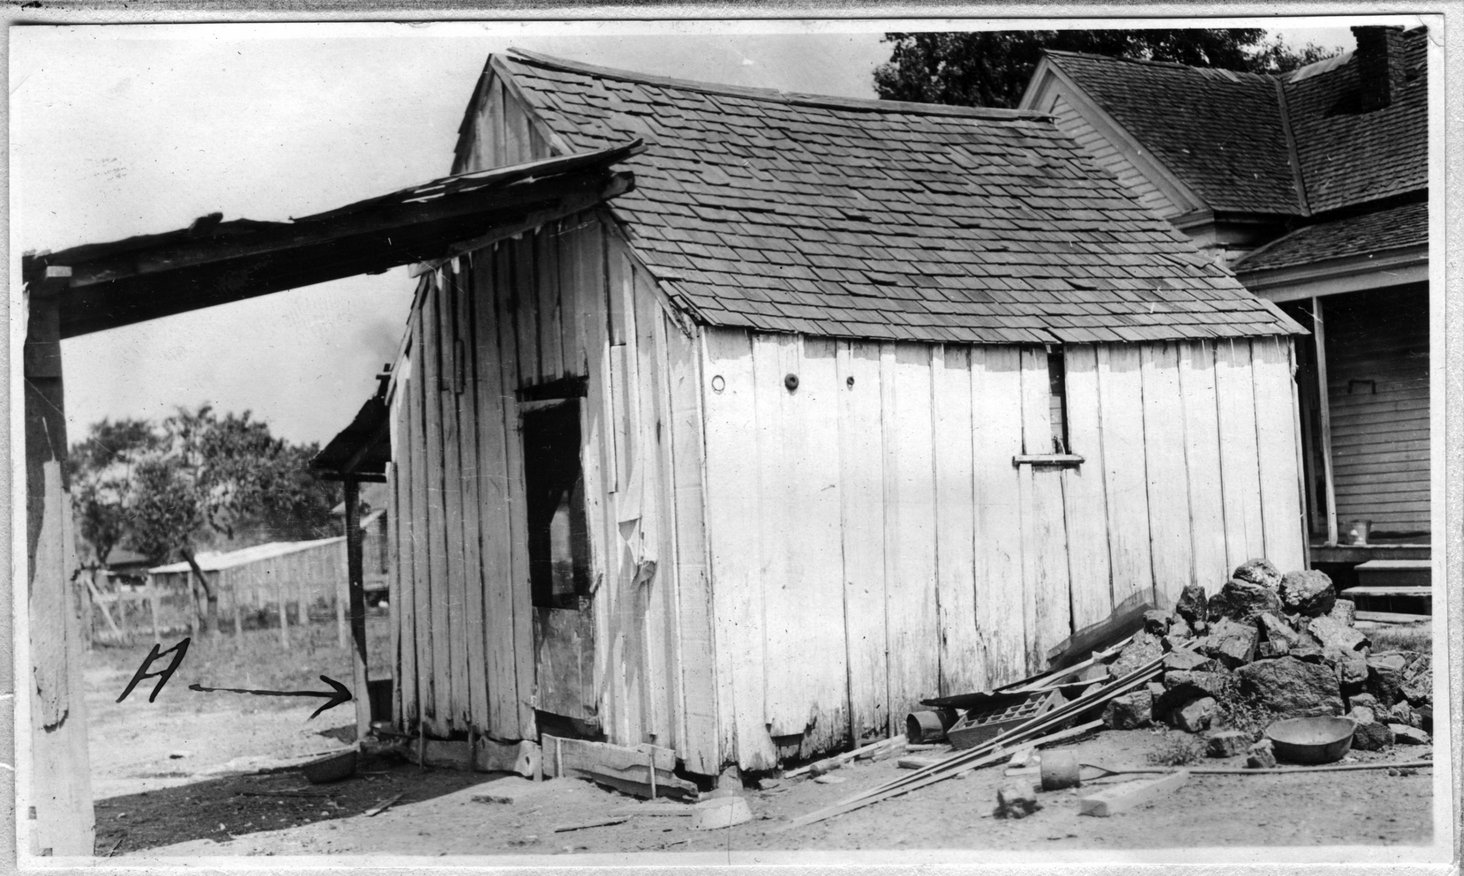 009~O. W. Meador Milk House Aug 1920.jpg